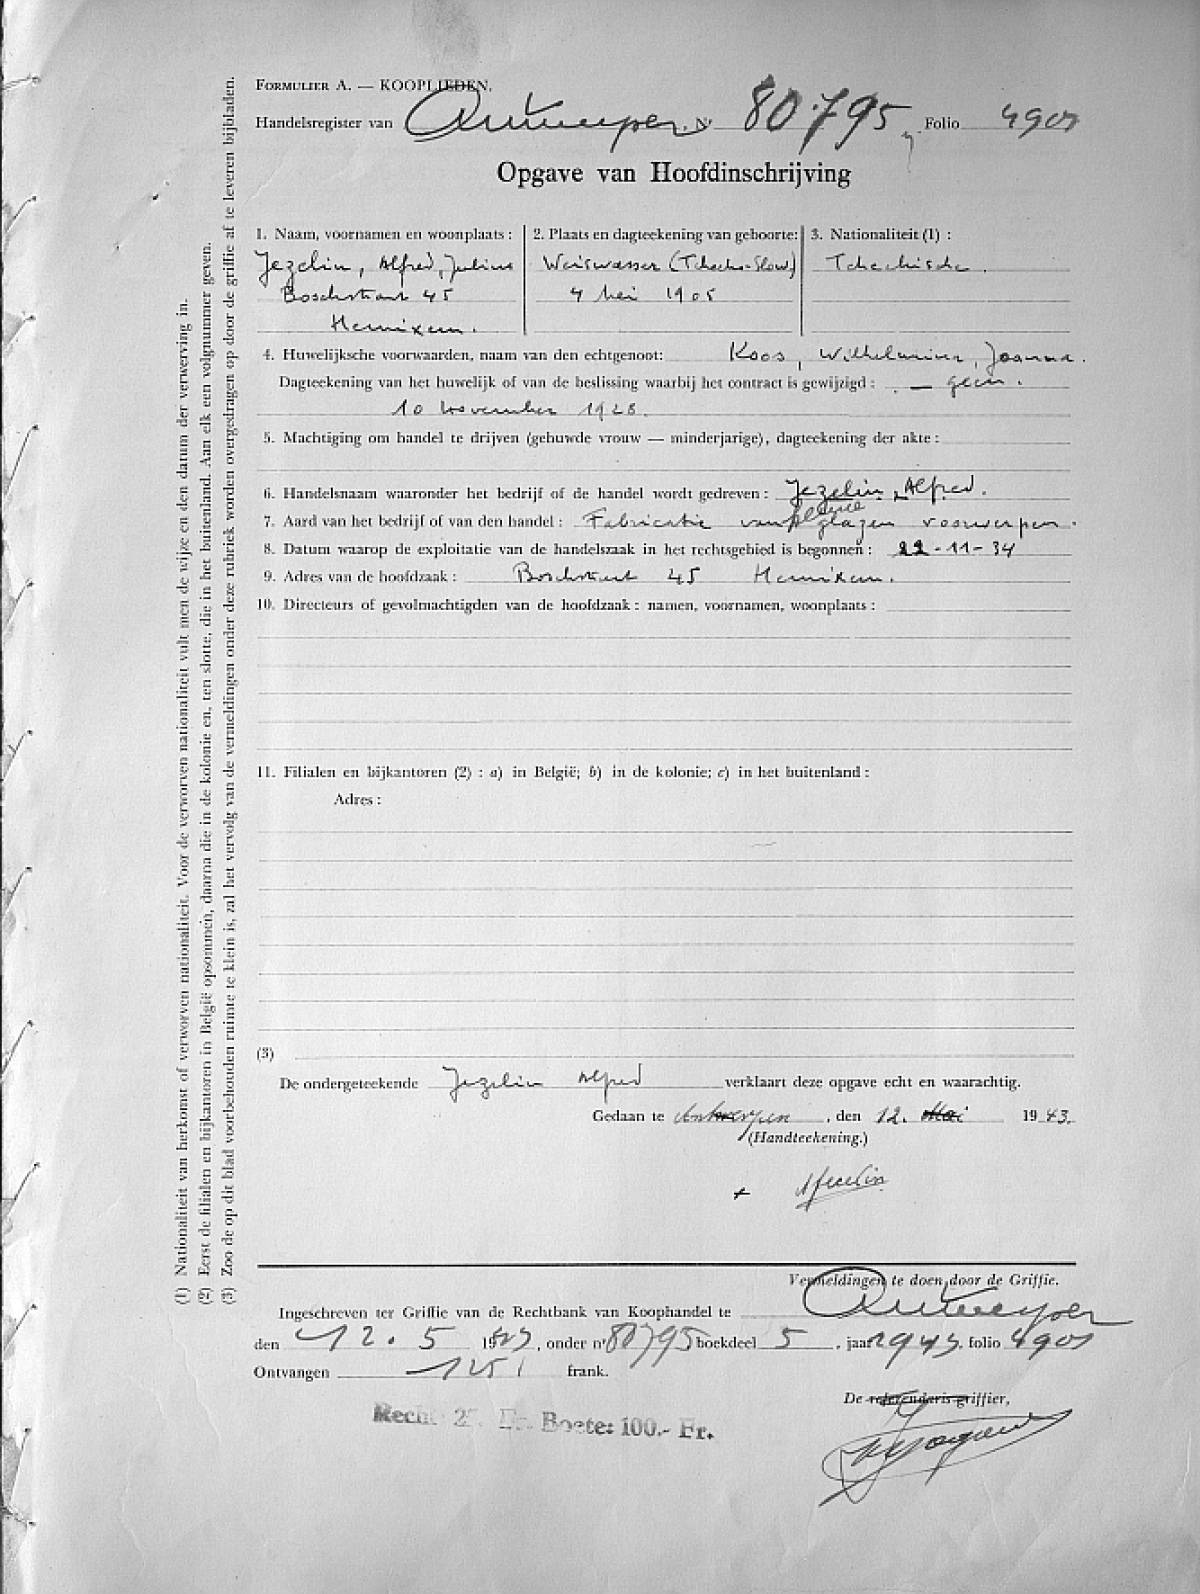 1943-05-12_inschrijving_handelsregister.jpg